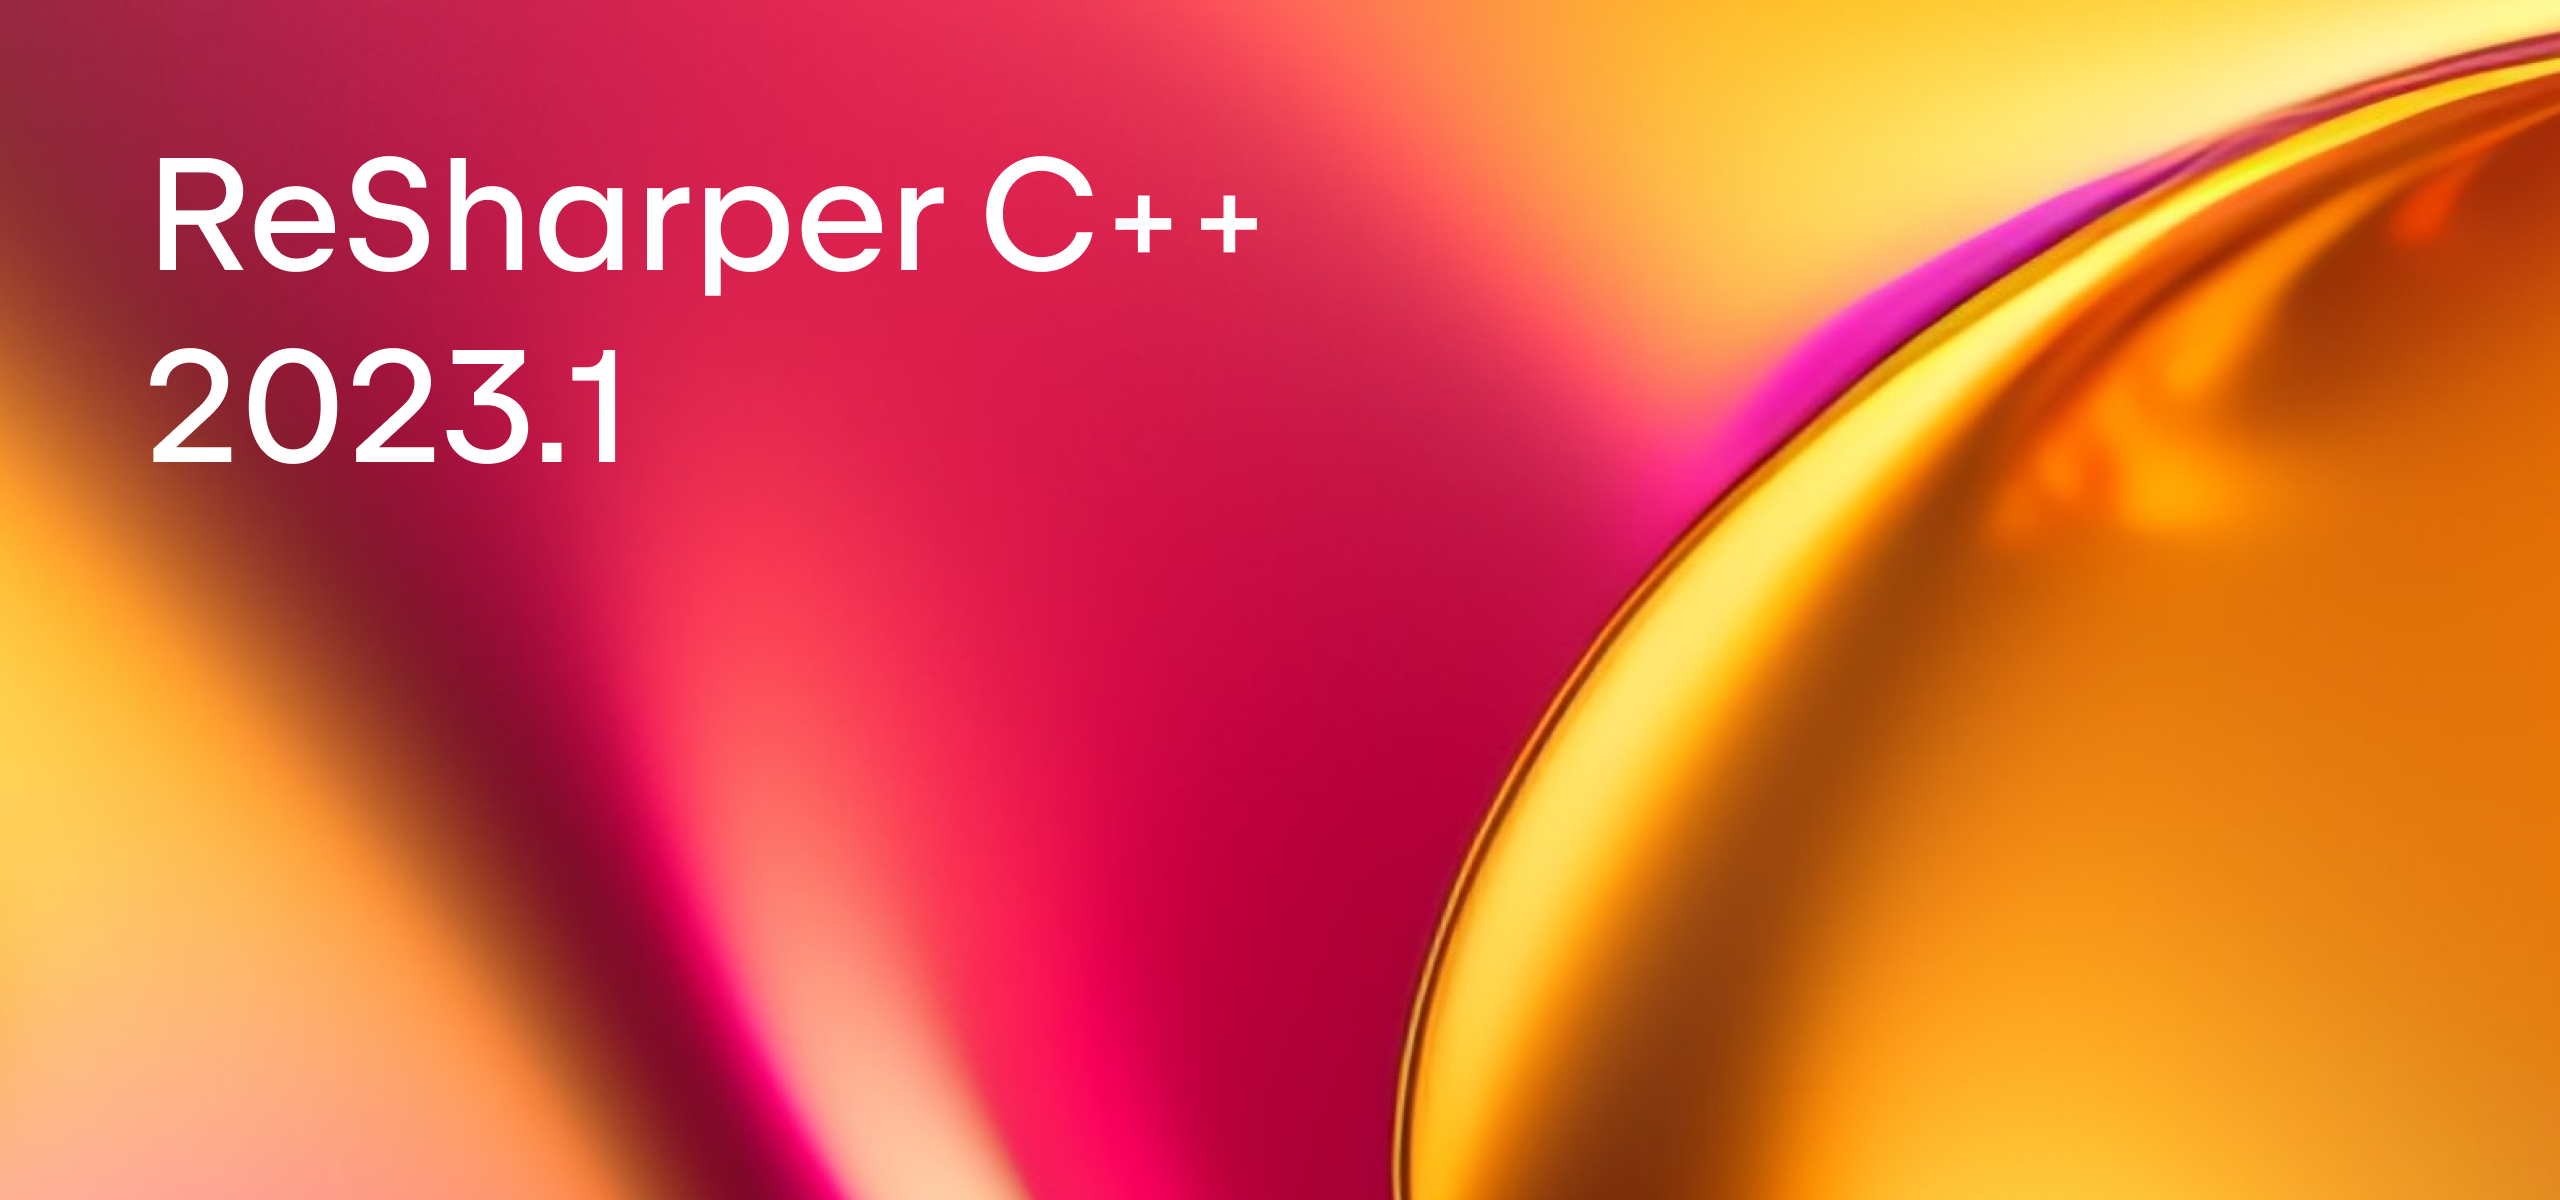 ReSharper C++ 2023.1